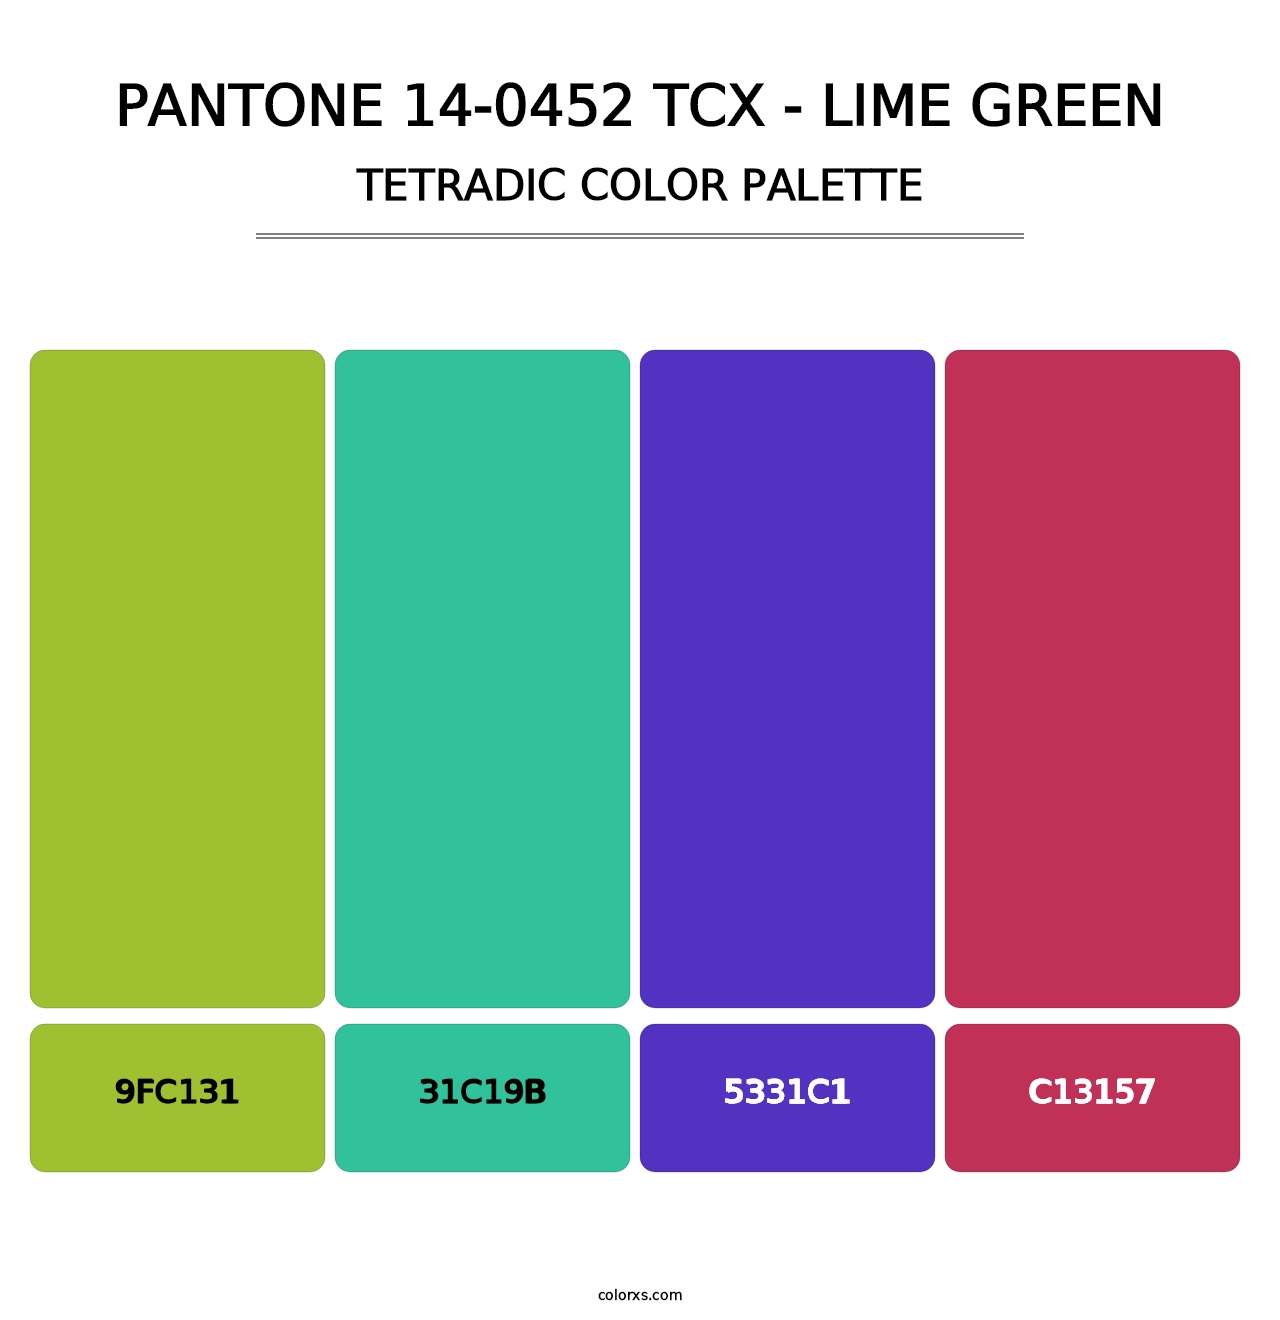 PANTONE 14-0452 TCX - Lime Green - Tetradic Color Palette